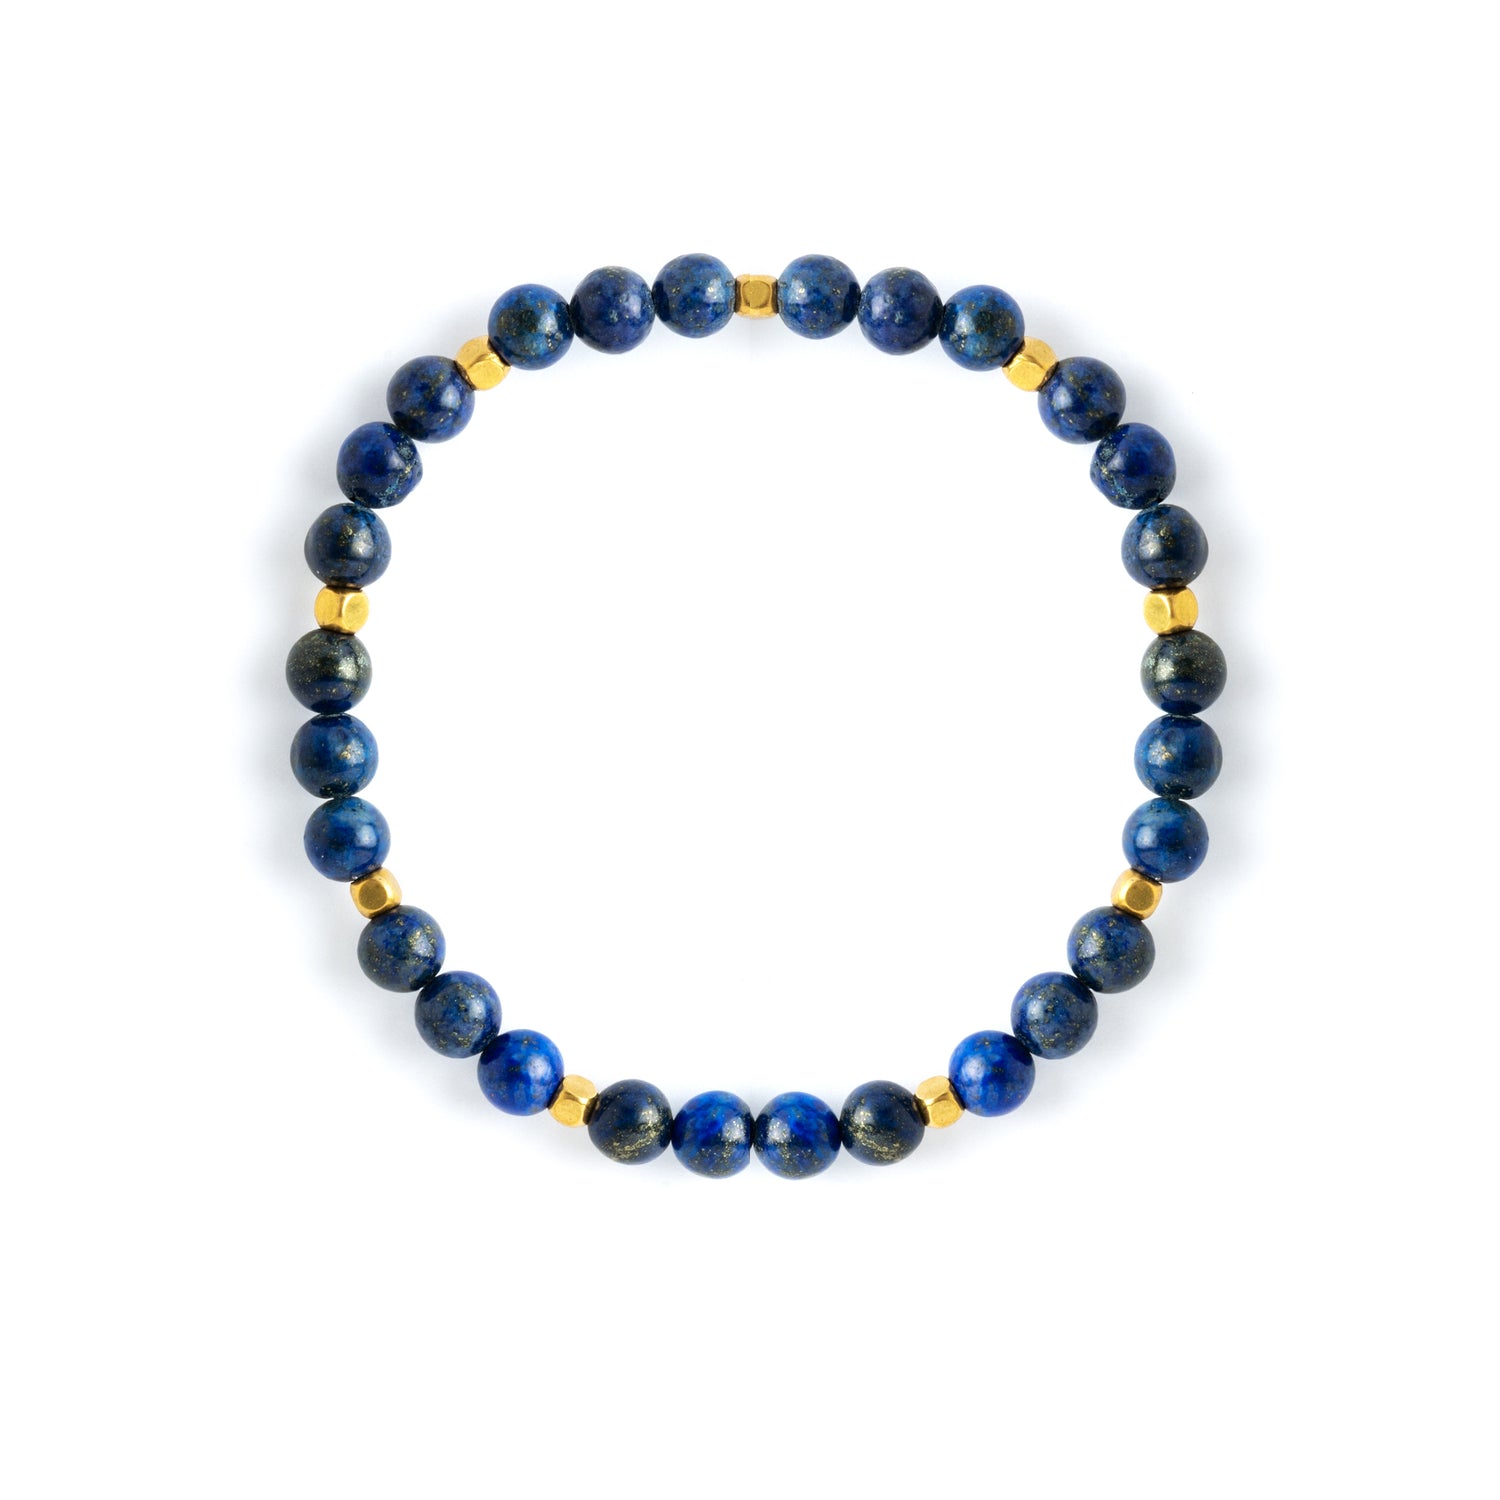 Lapis Lazuli beads bracelet with interlocking petite squared golden brass beads